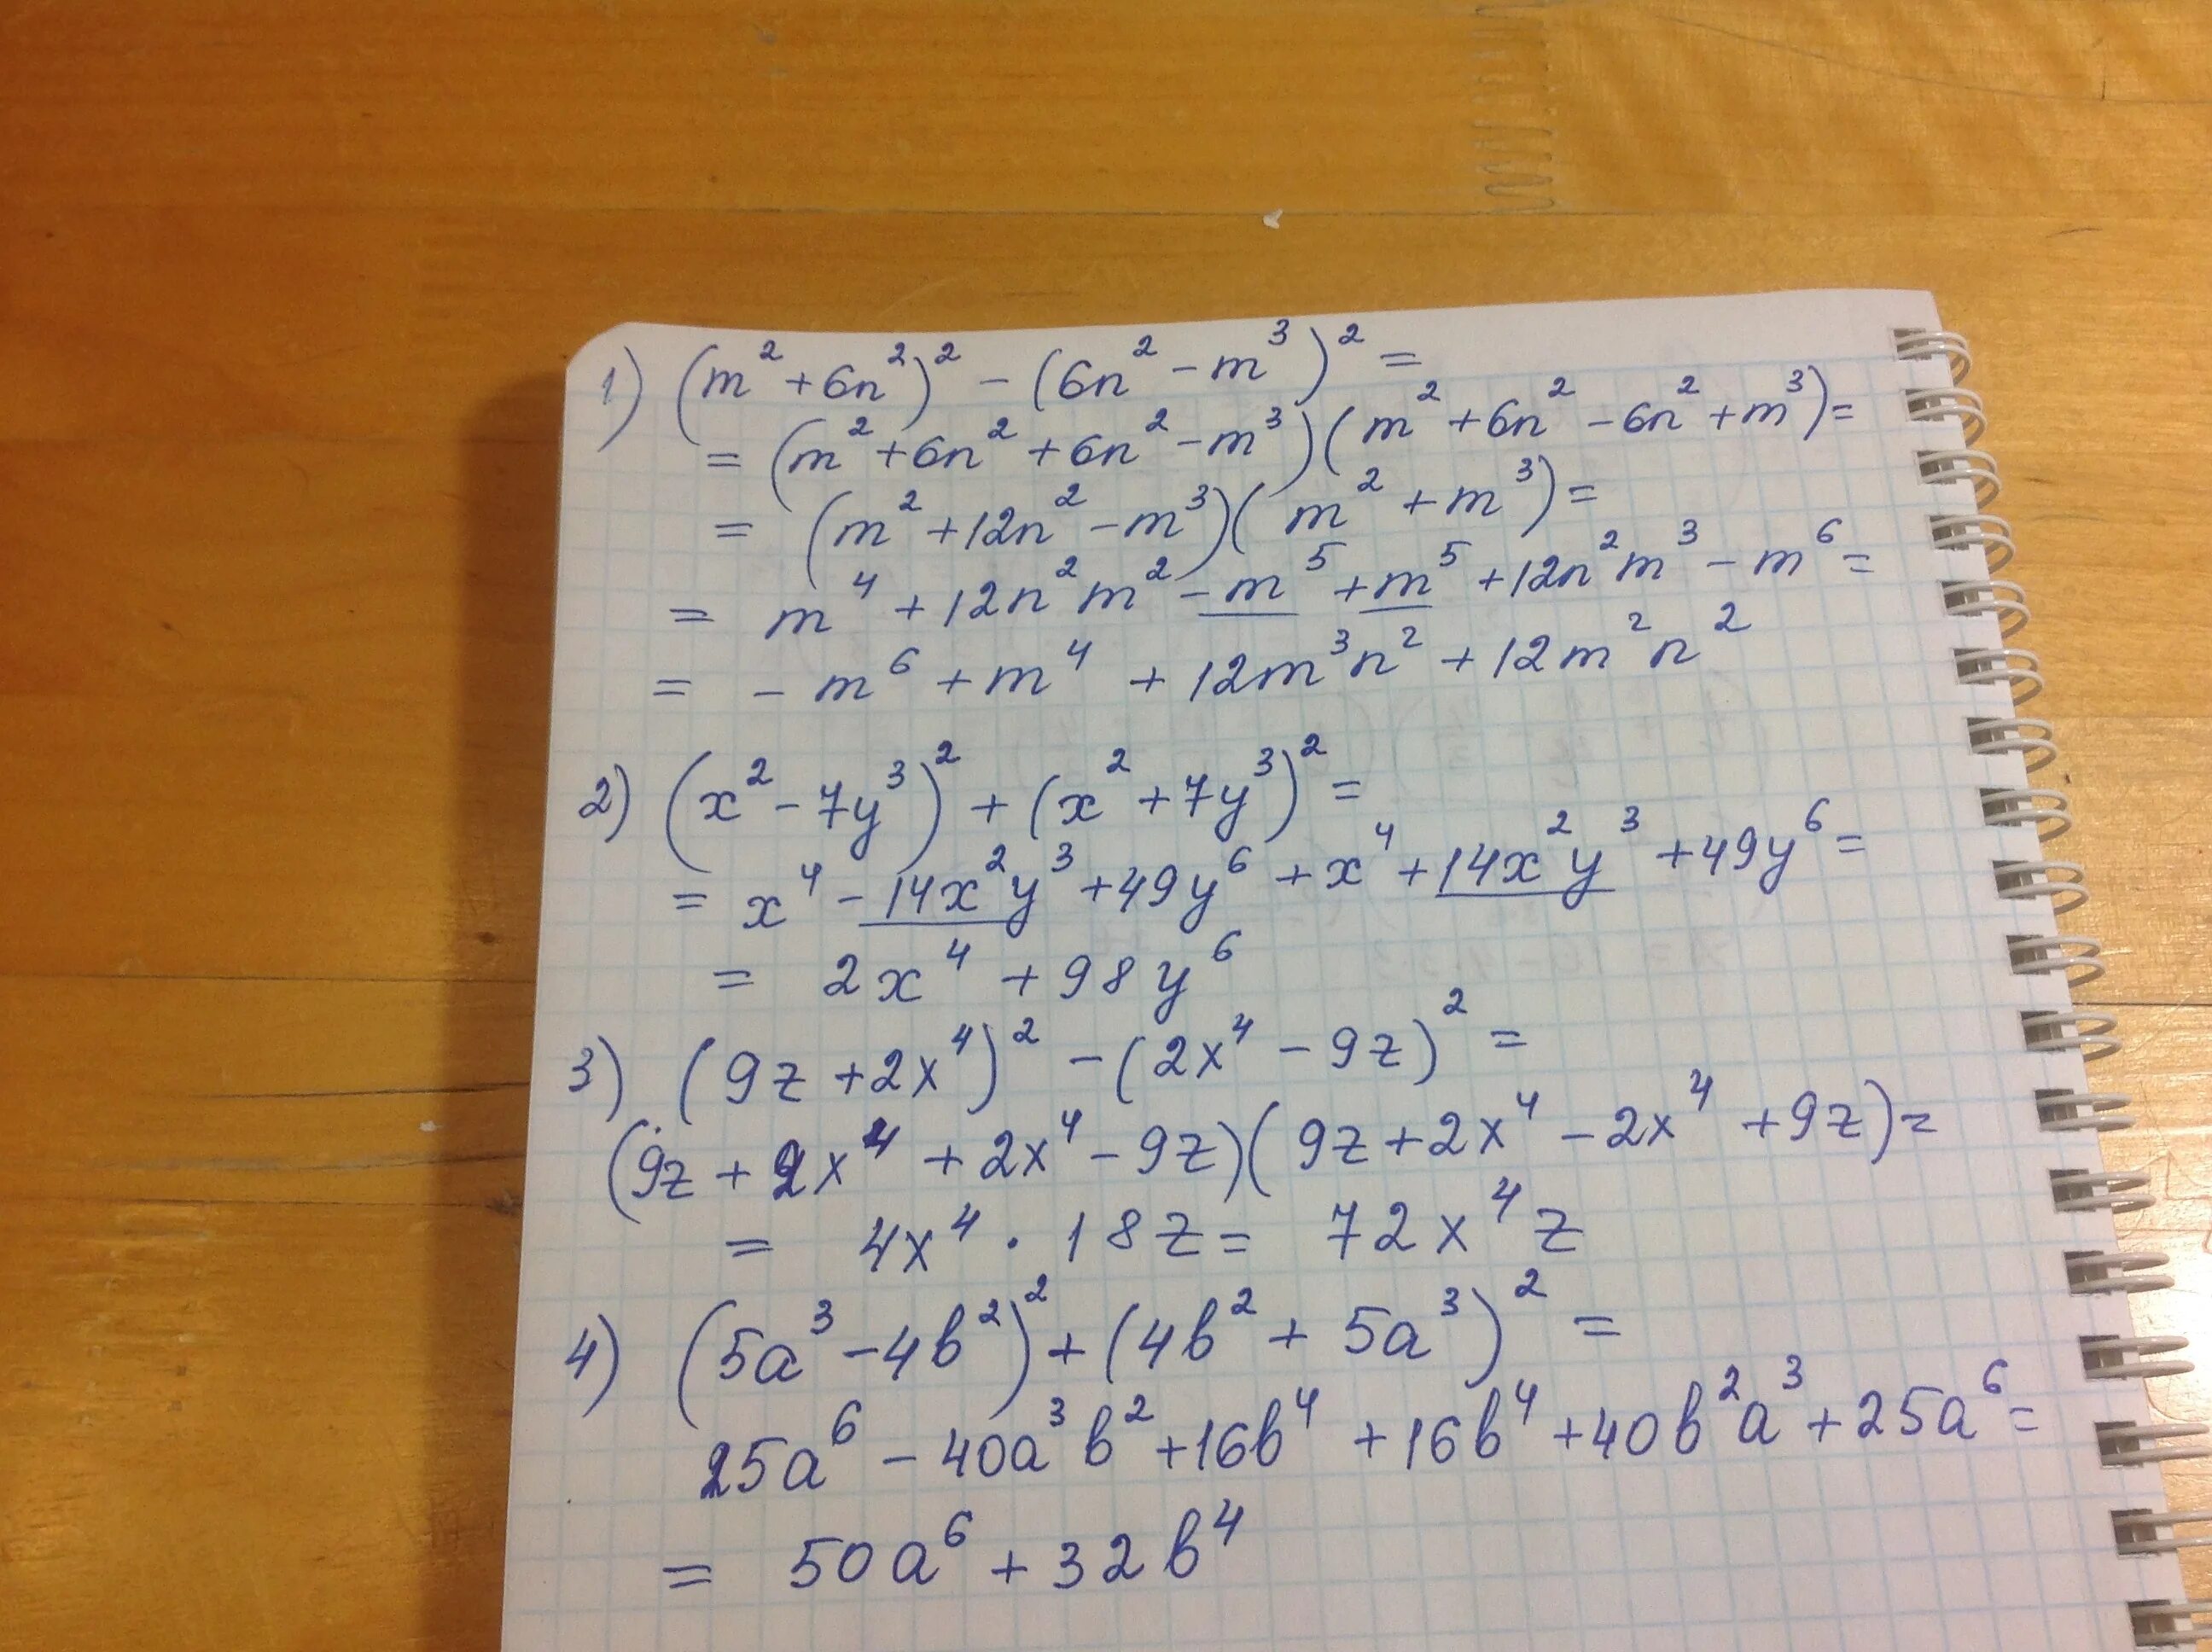 Упростите выражение 1 4y 3 4y. (M+2)2 - (3m + 3)2 = 0. Упростите выражение 1 m n 1 m n 2 3m 3n. (0-3)^2+(5-2)^2. (3x+1)^2+(x-7)^2.